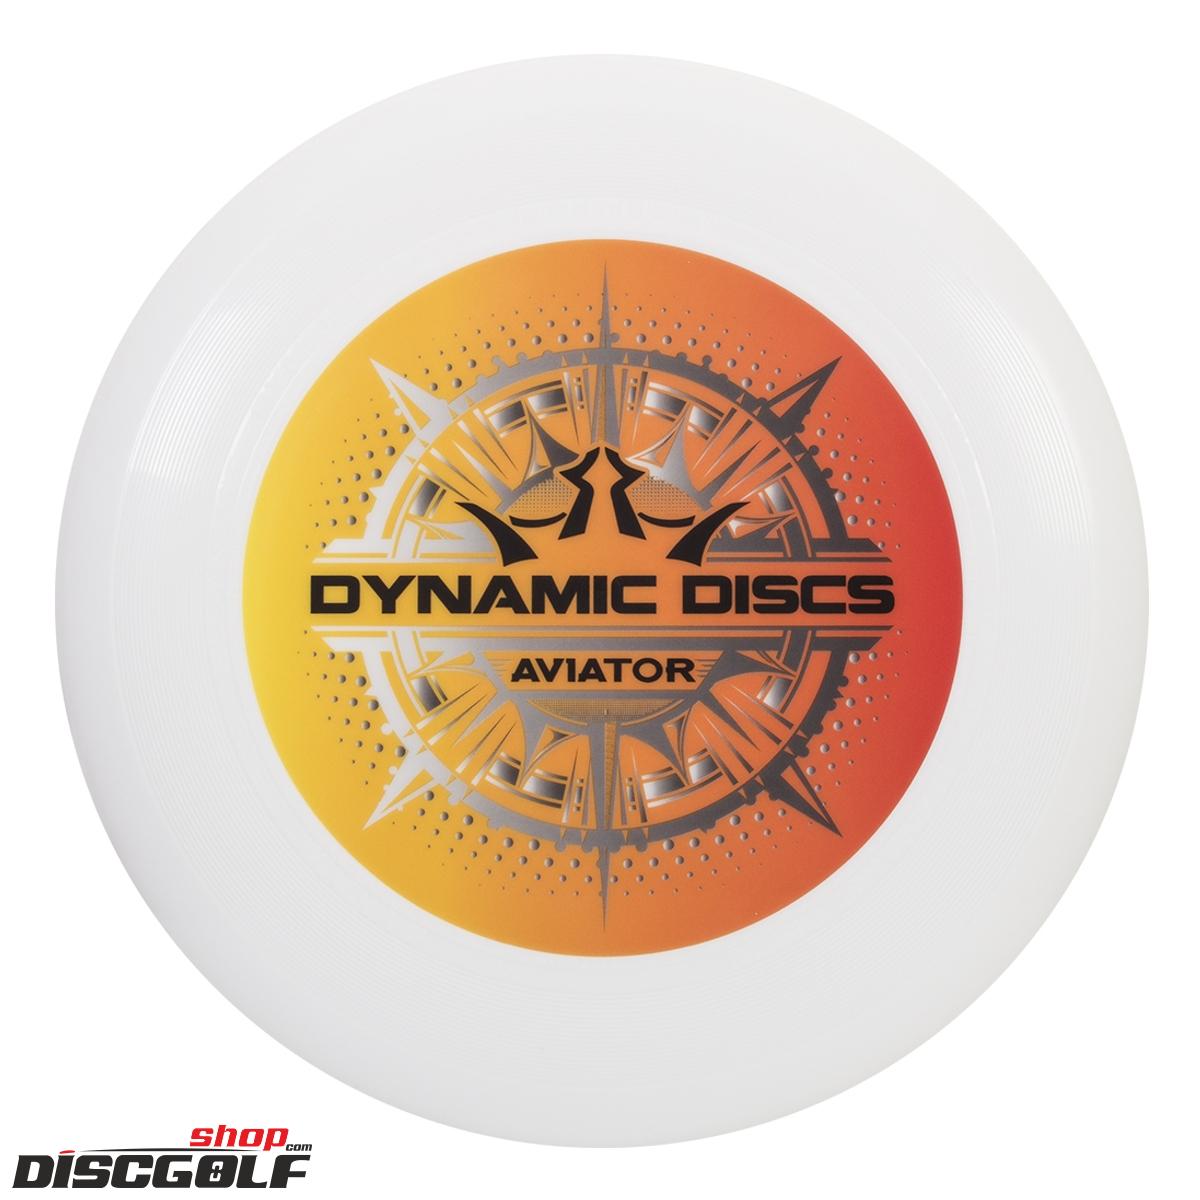 Dynamic Discs Aviator Center Dye - různé barvy (discgolf)